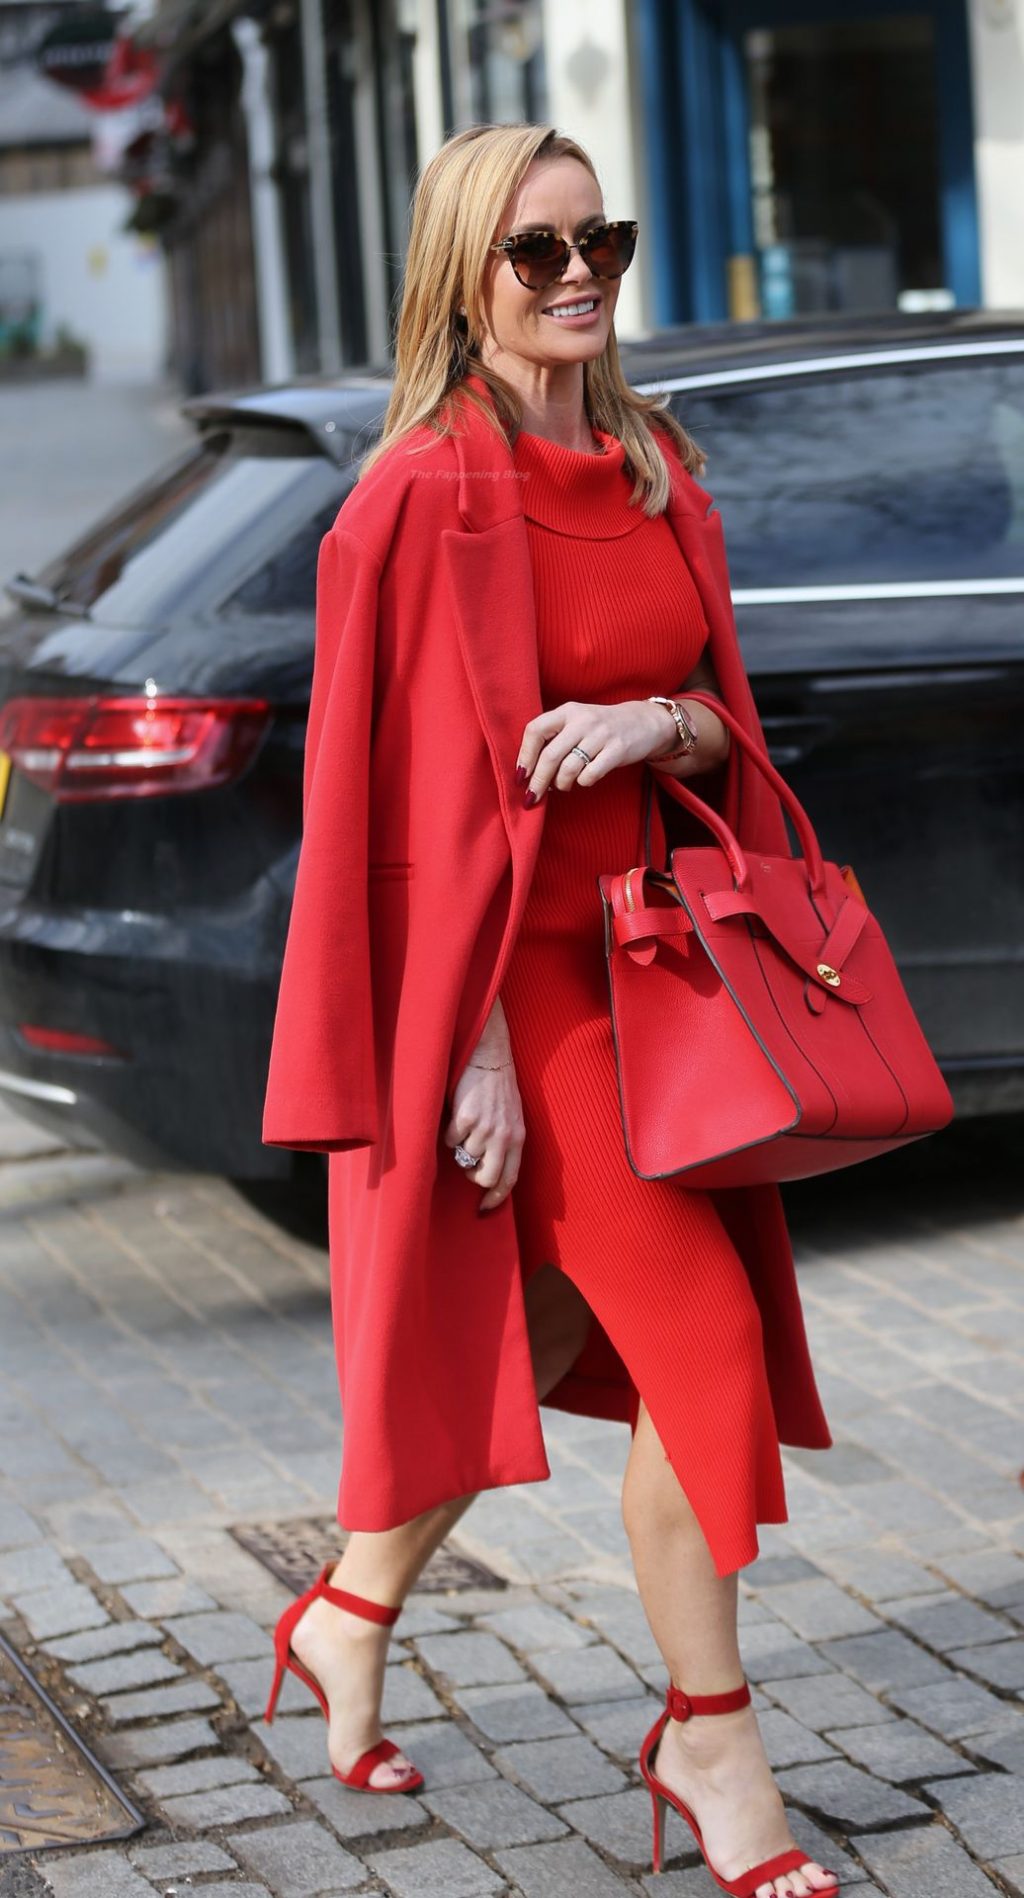 Amanda Holden Looks Hot in Red at Heart Radio Studios (42 Photos)